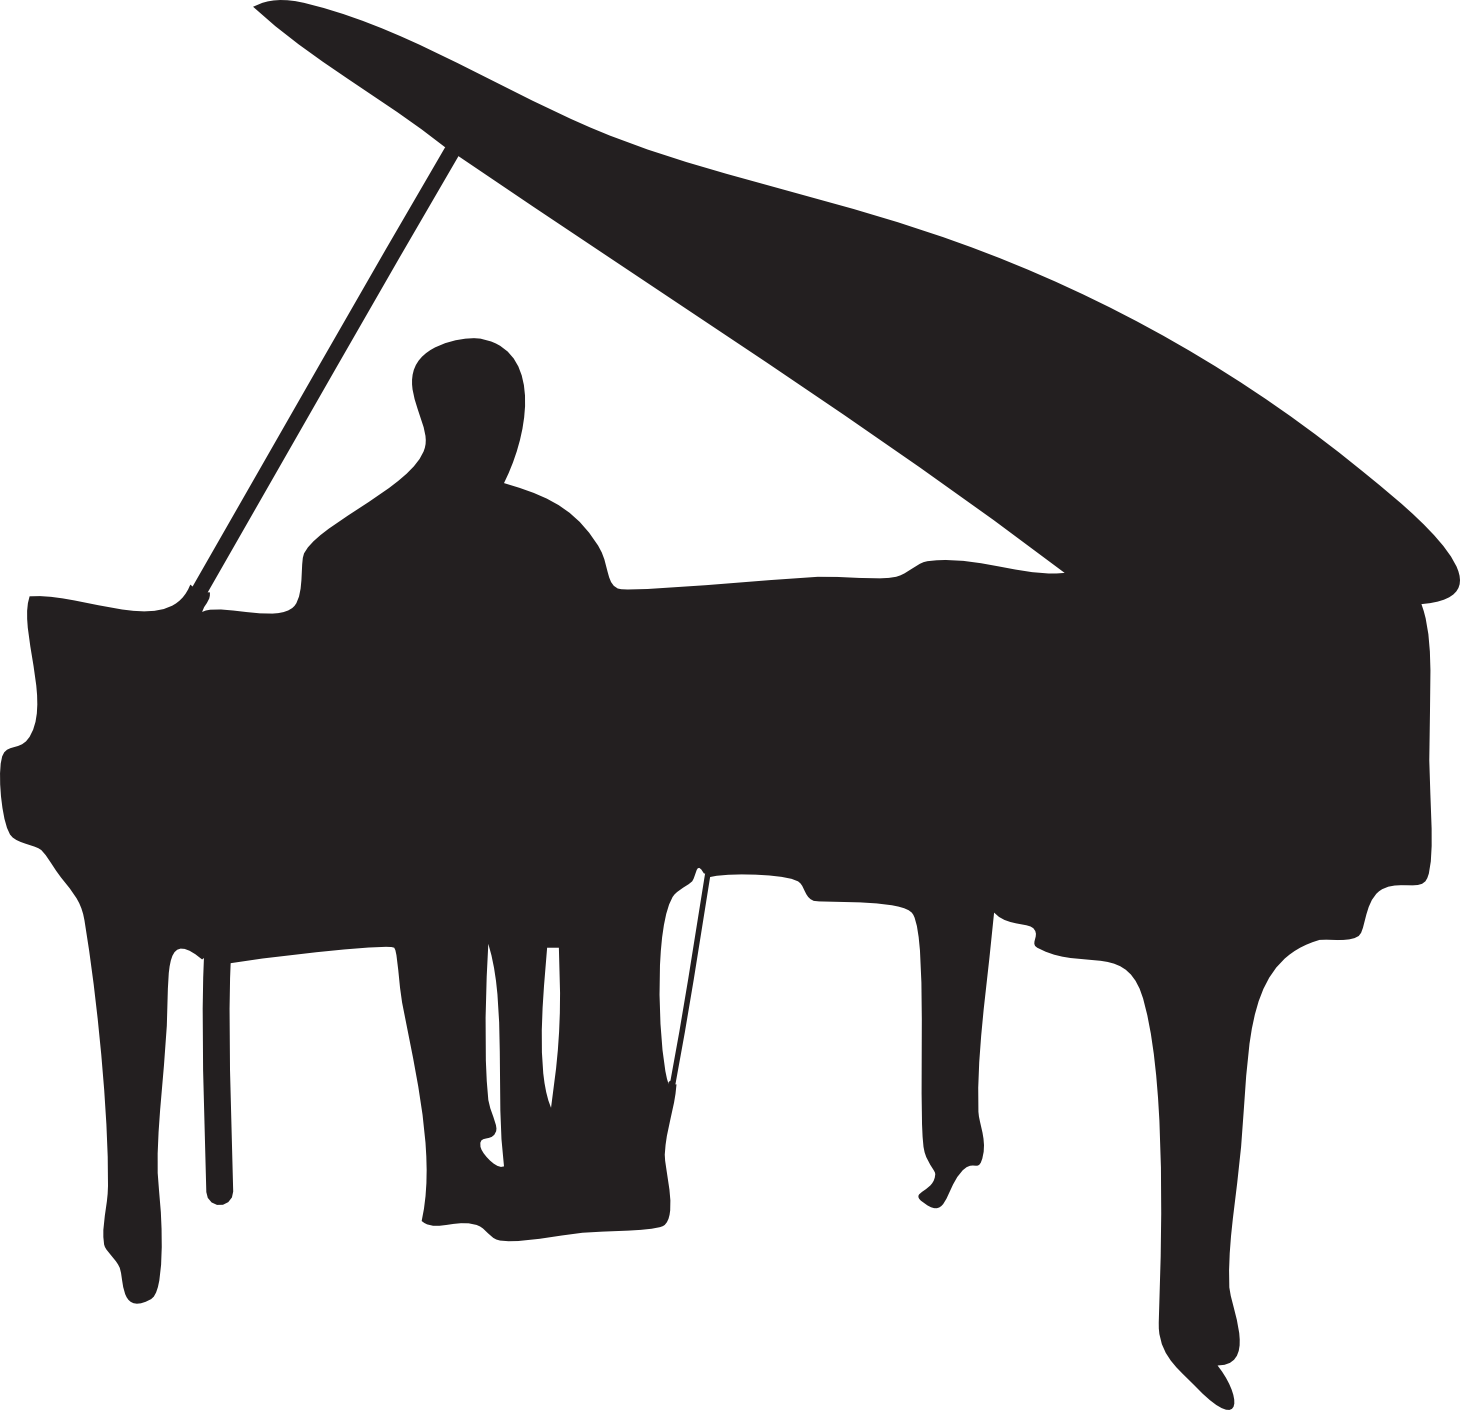 Jazz Pianist - Man Playing Piano Silhouette (1460x1410)